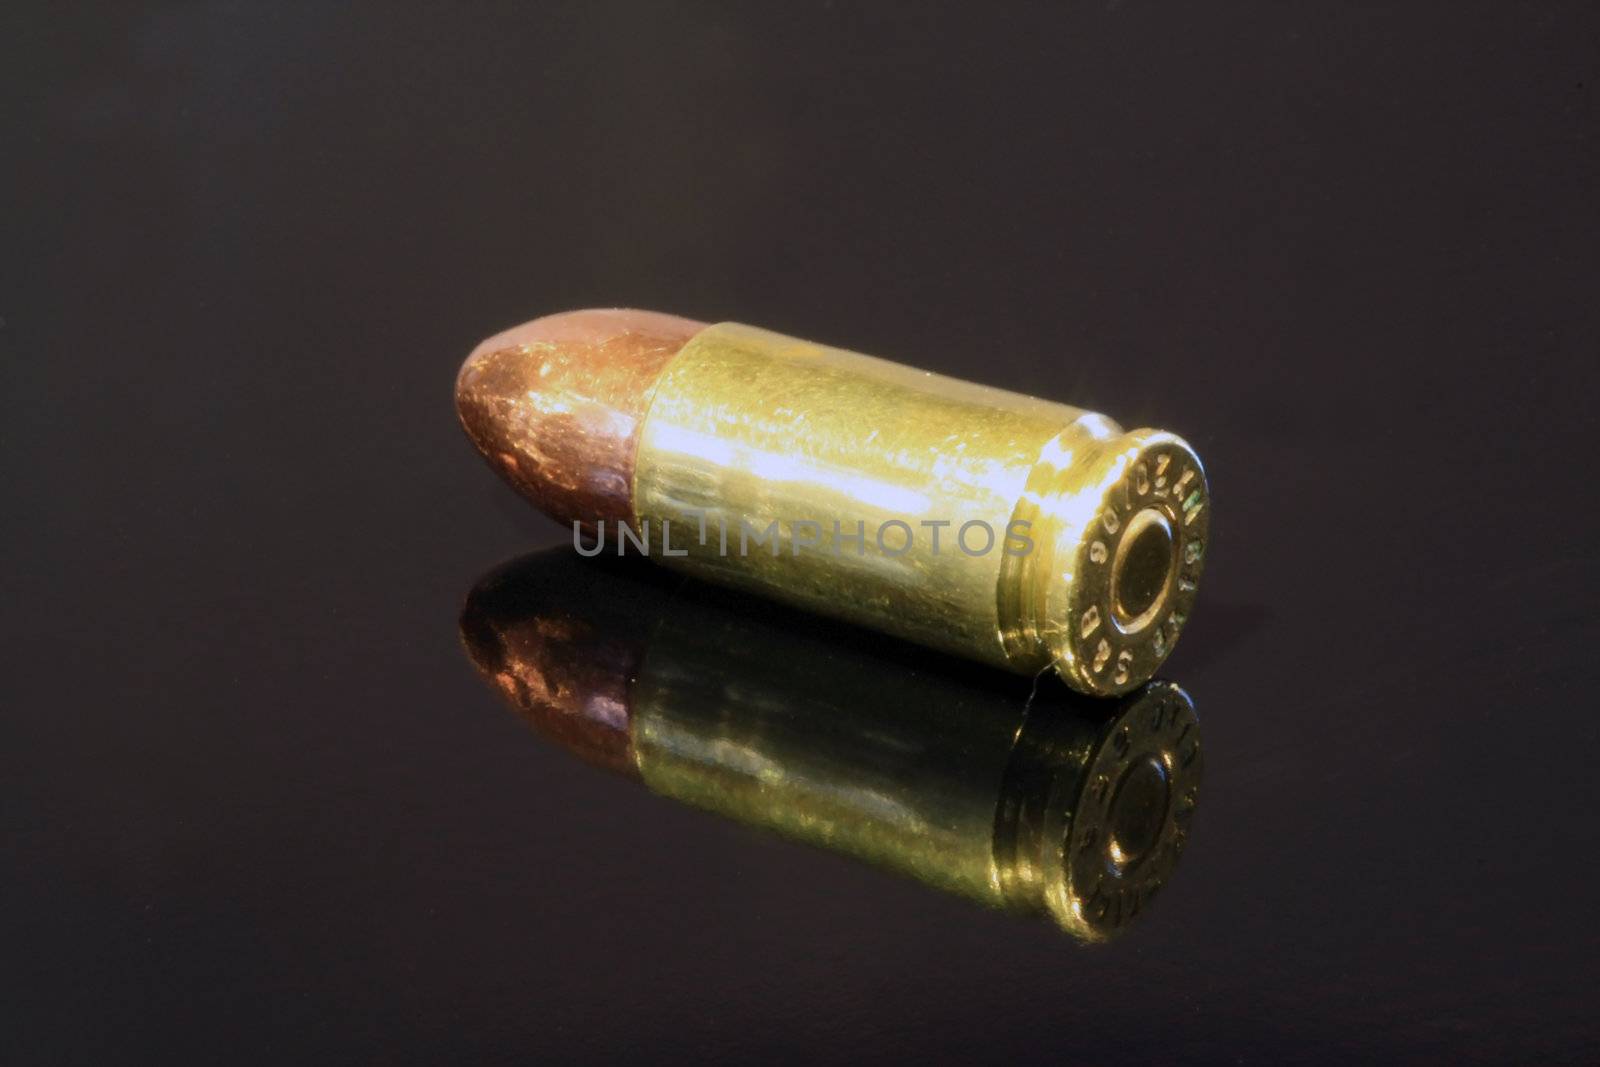 9mm bullet on black surface